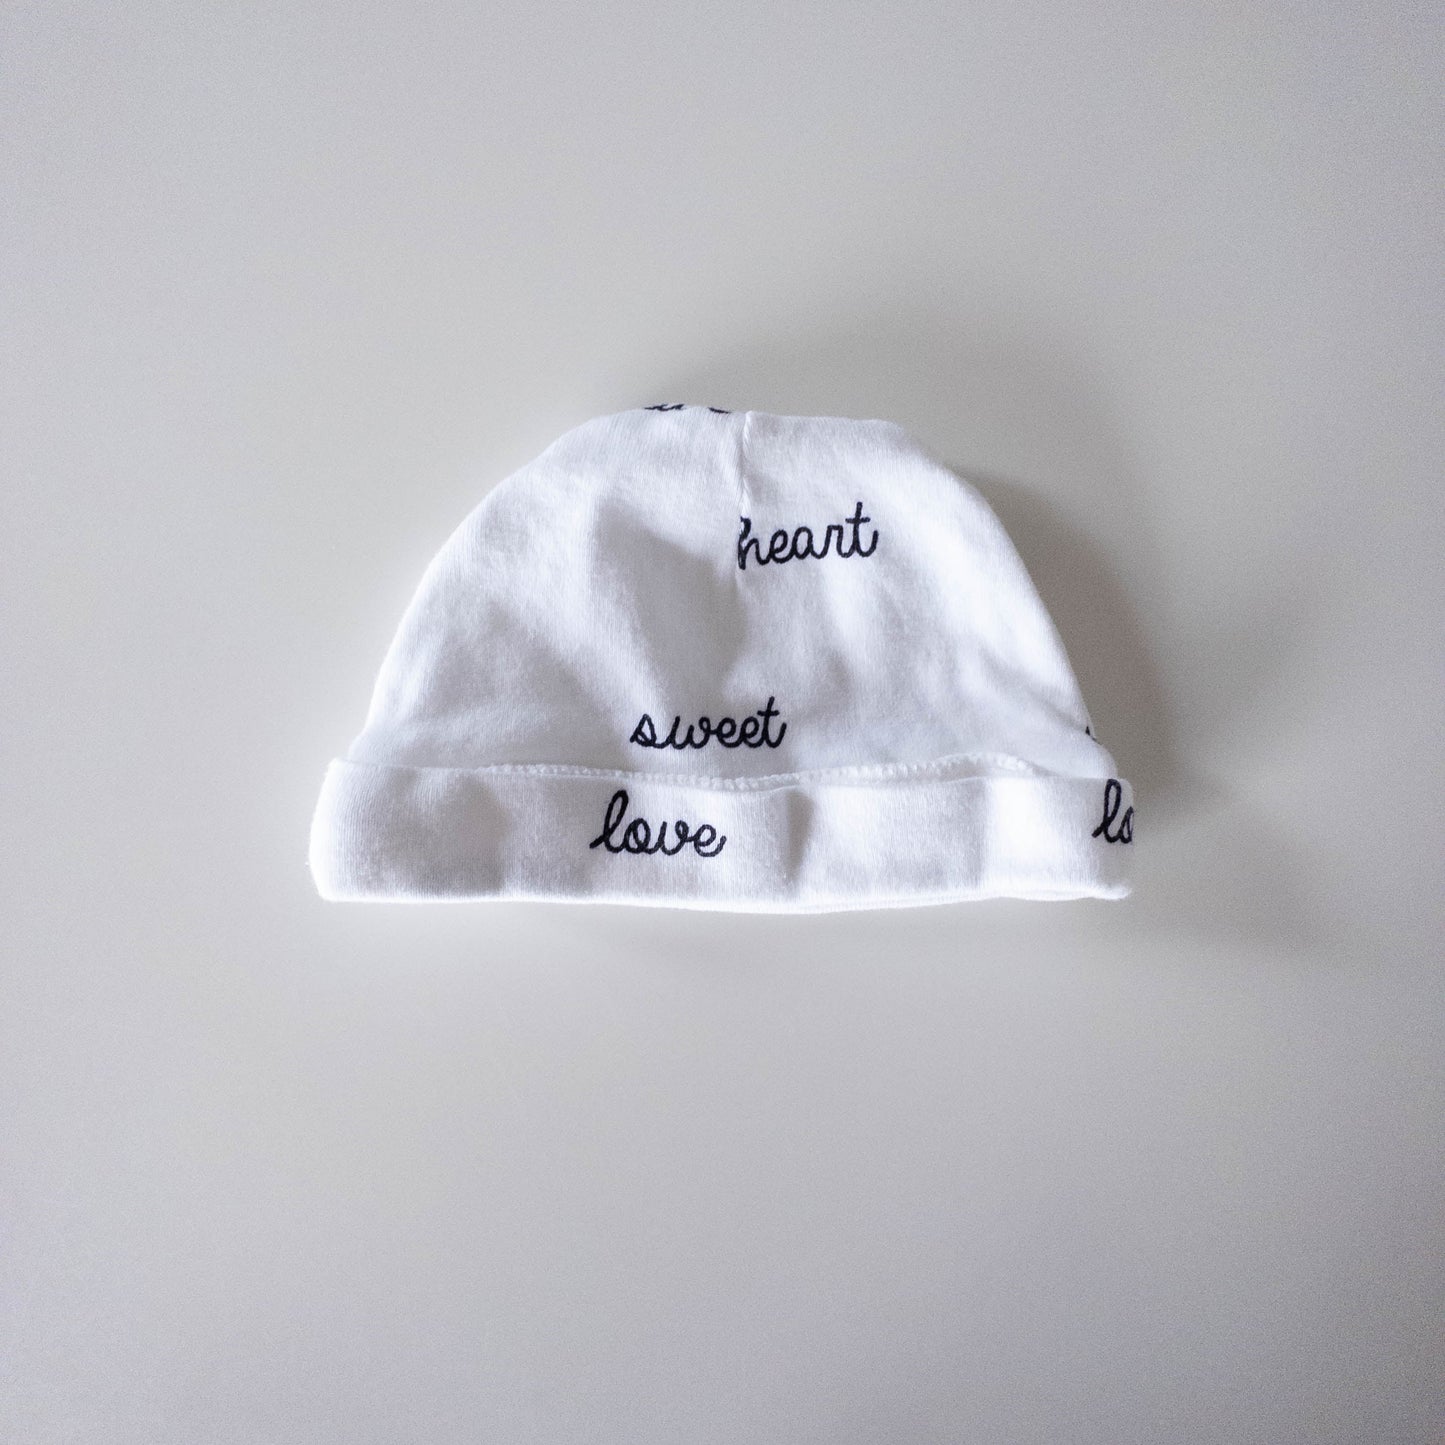 Unknown brand - Hat - 0-3 months (approx)